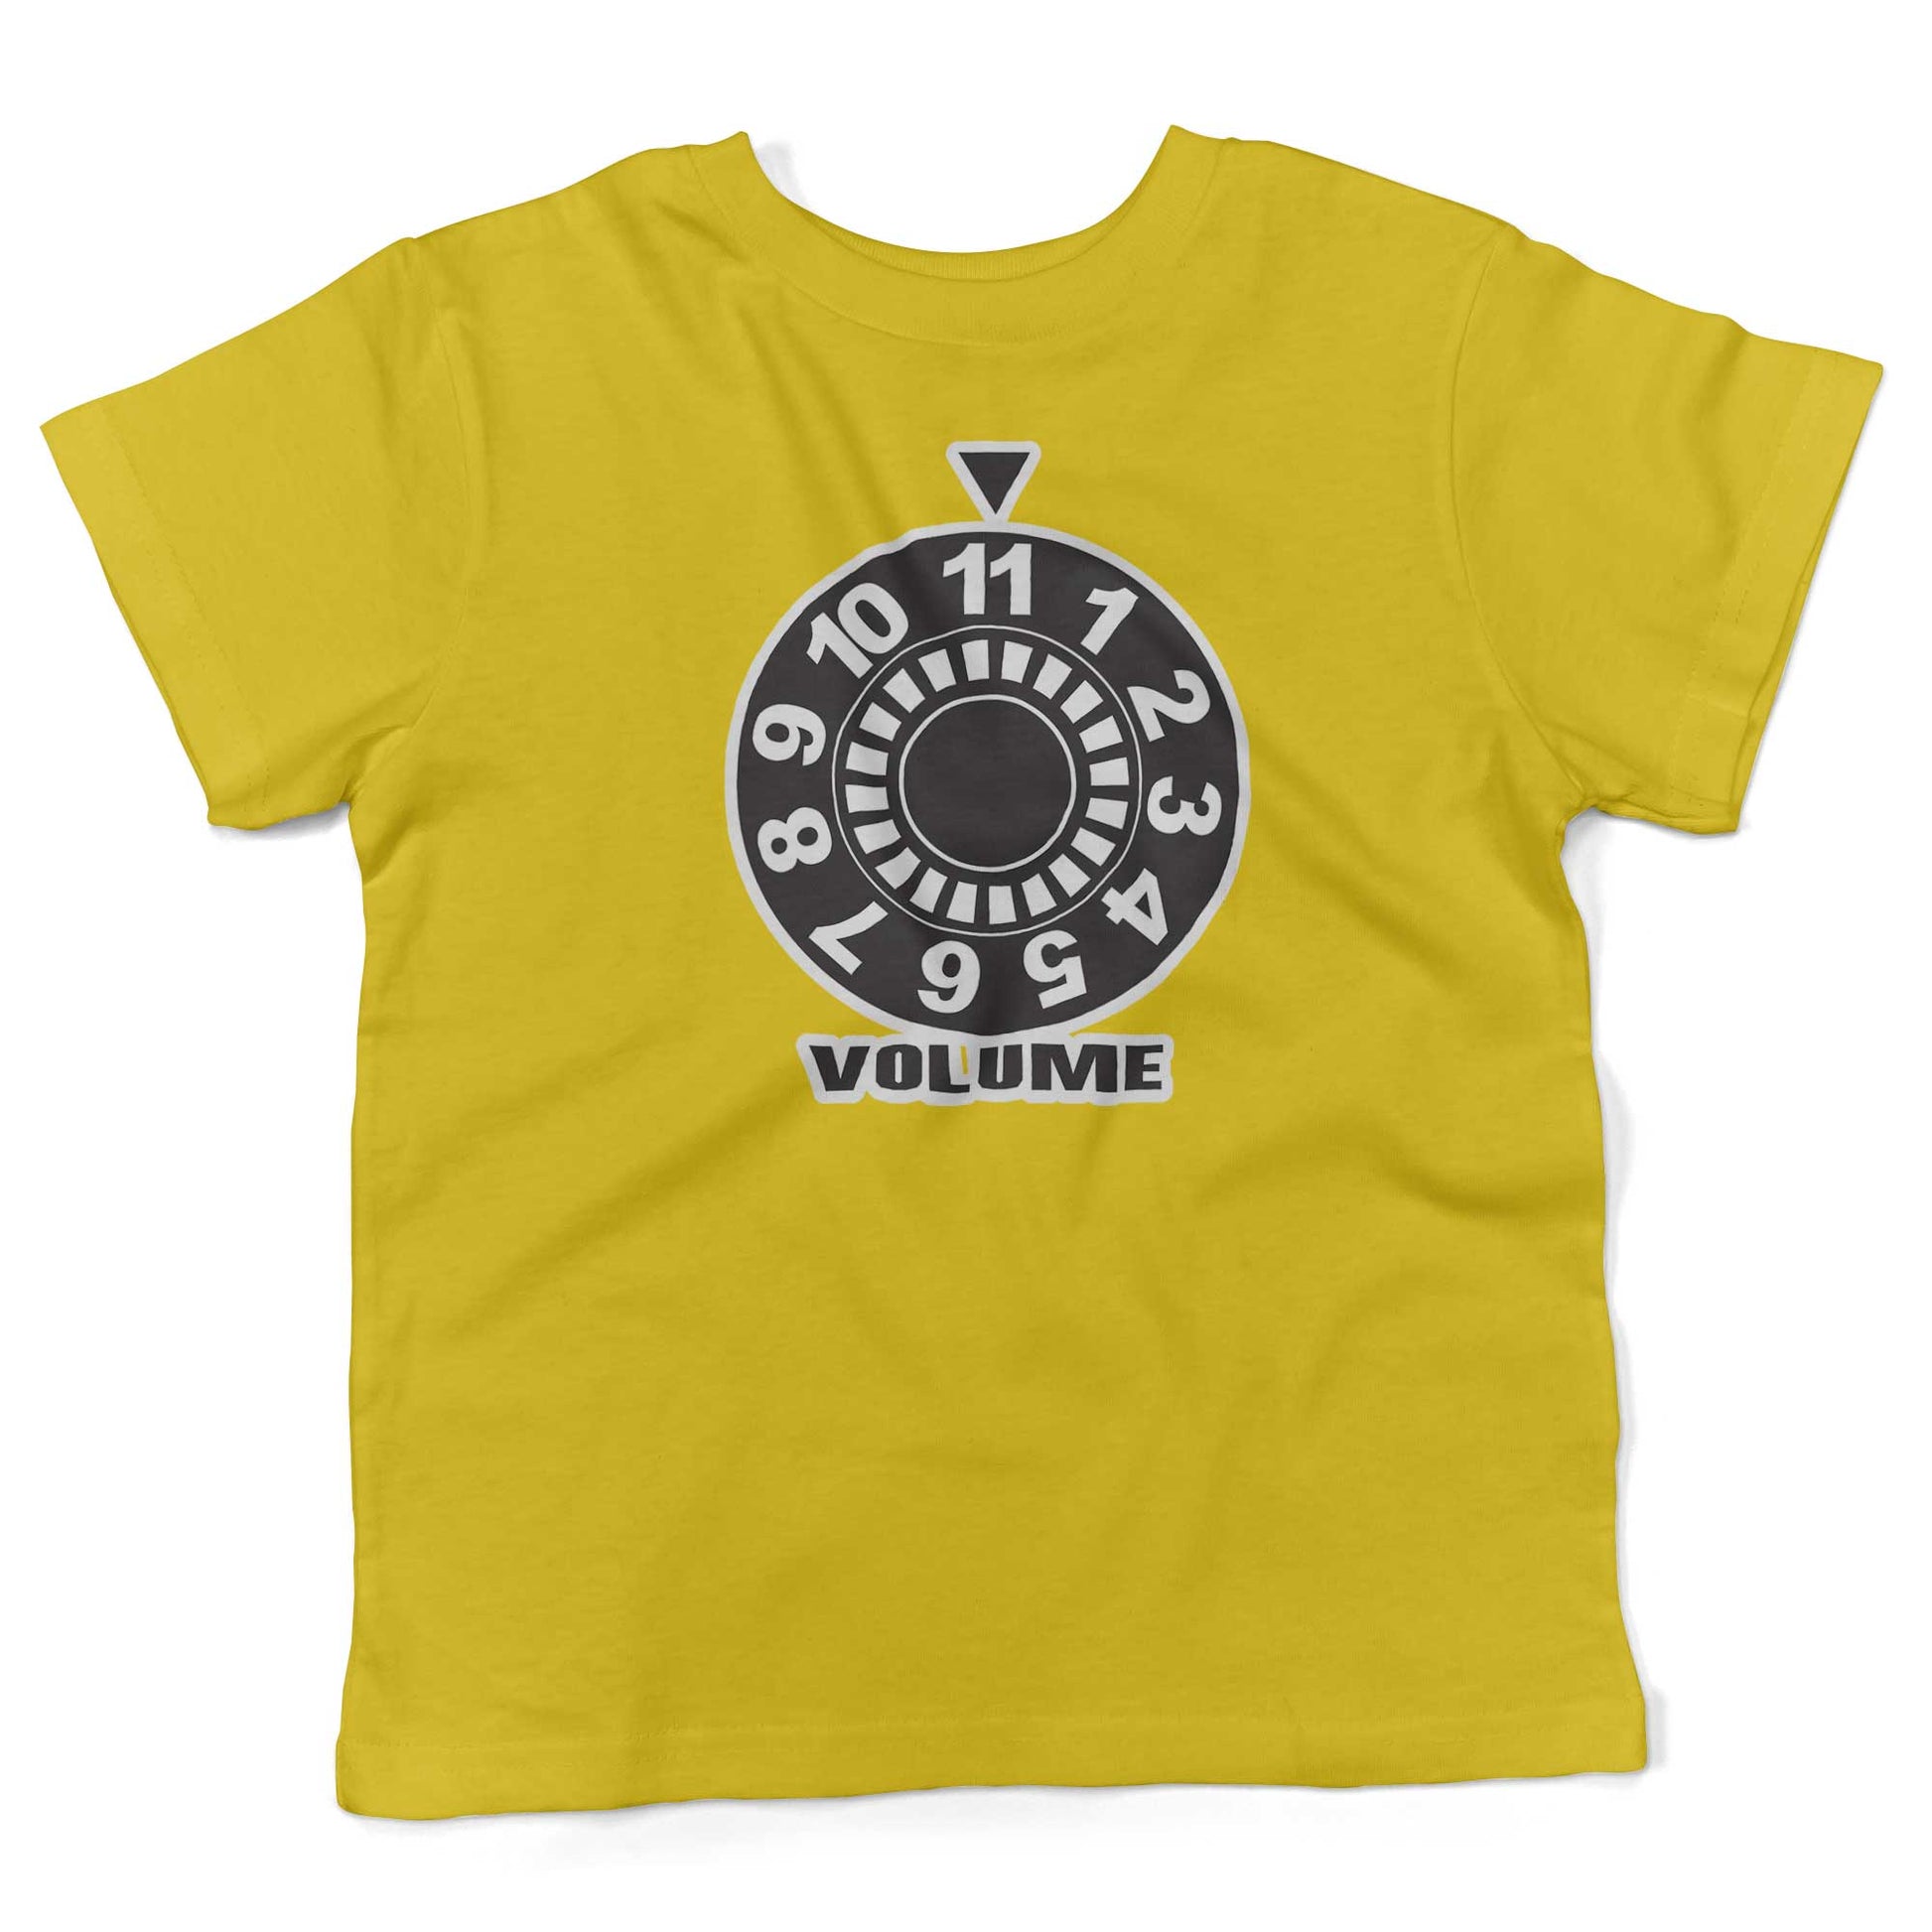 Turn It Up To 11 Toddler Shirt-Sunshine Yellow-2T